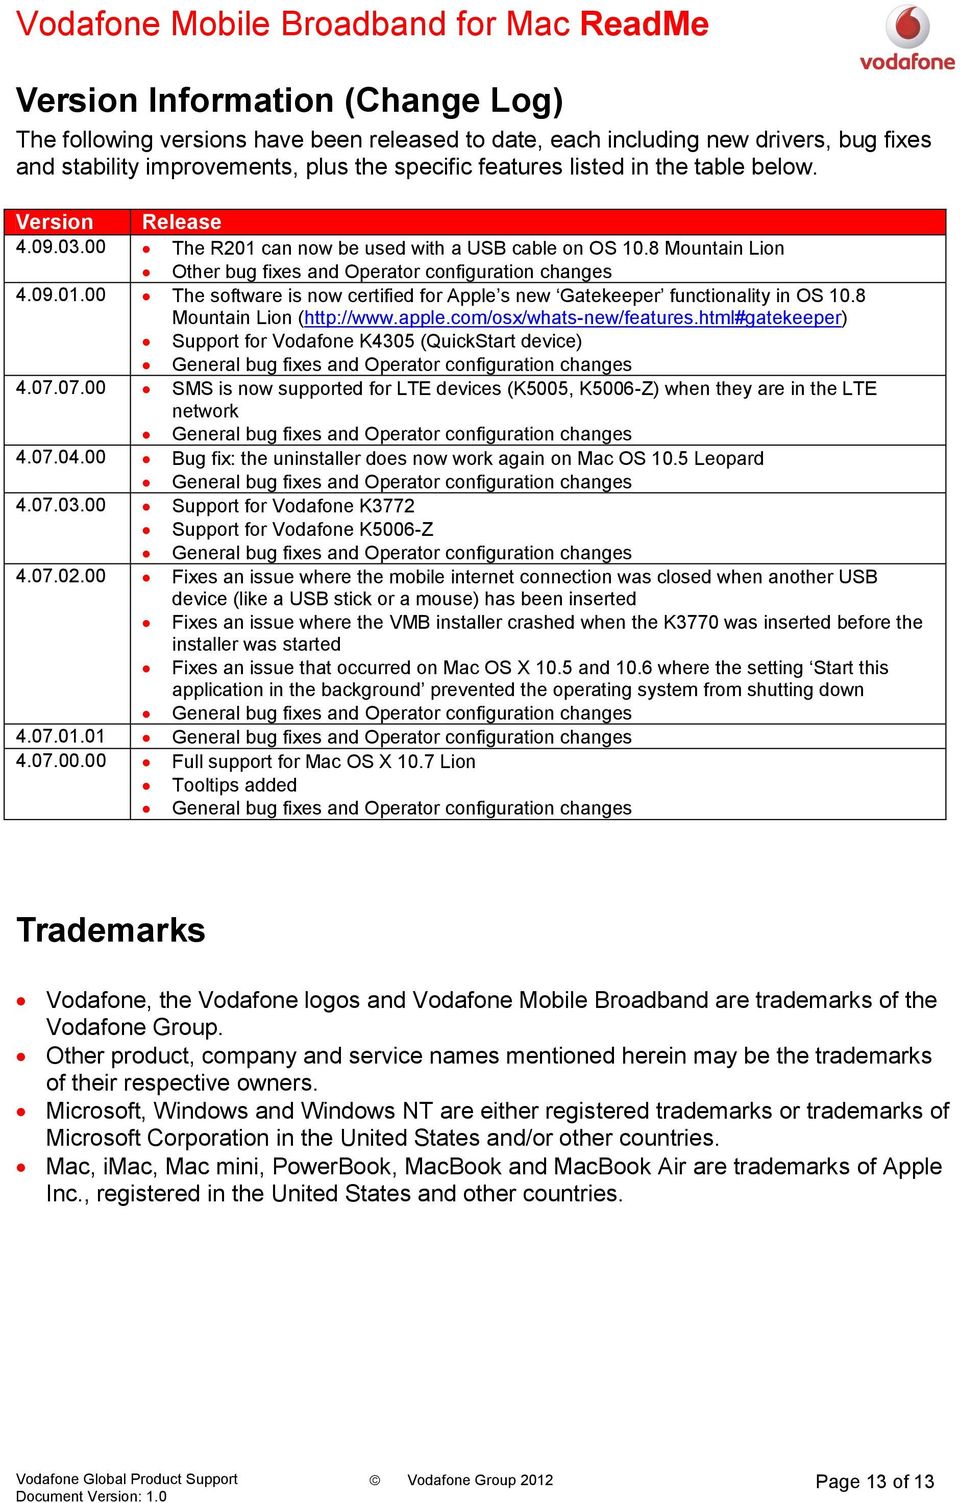 vodafone mobile broadband software for mac lion